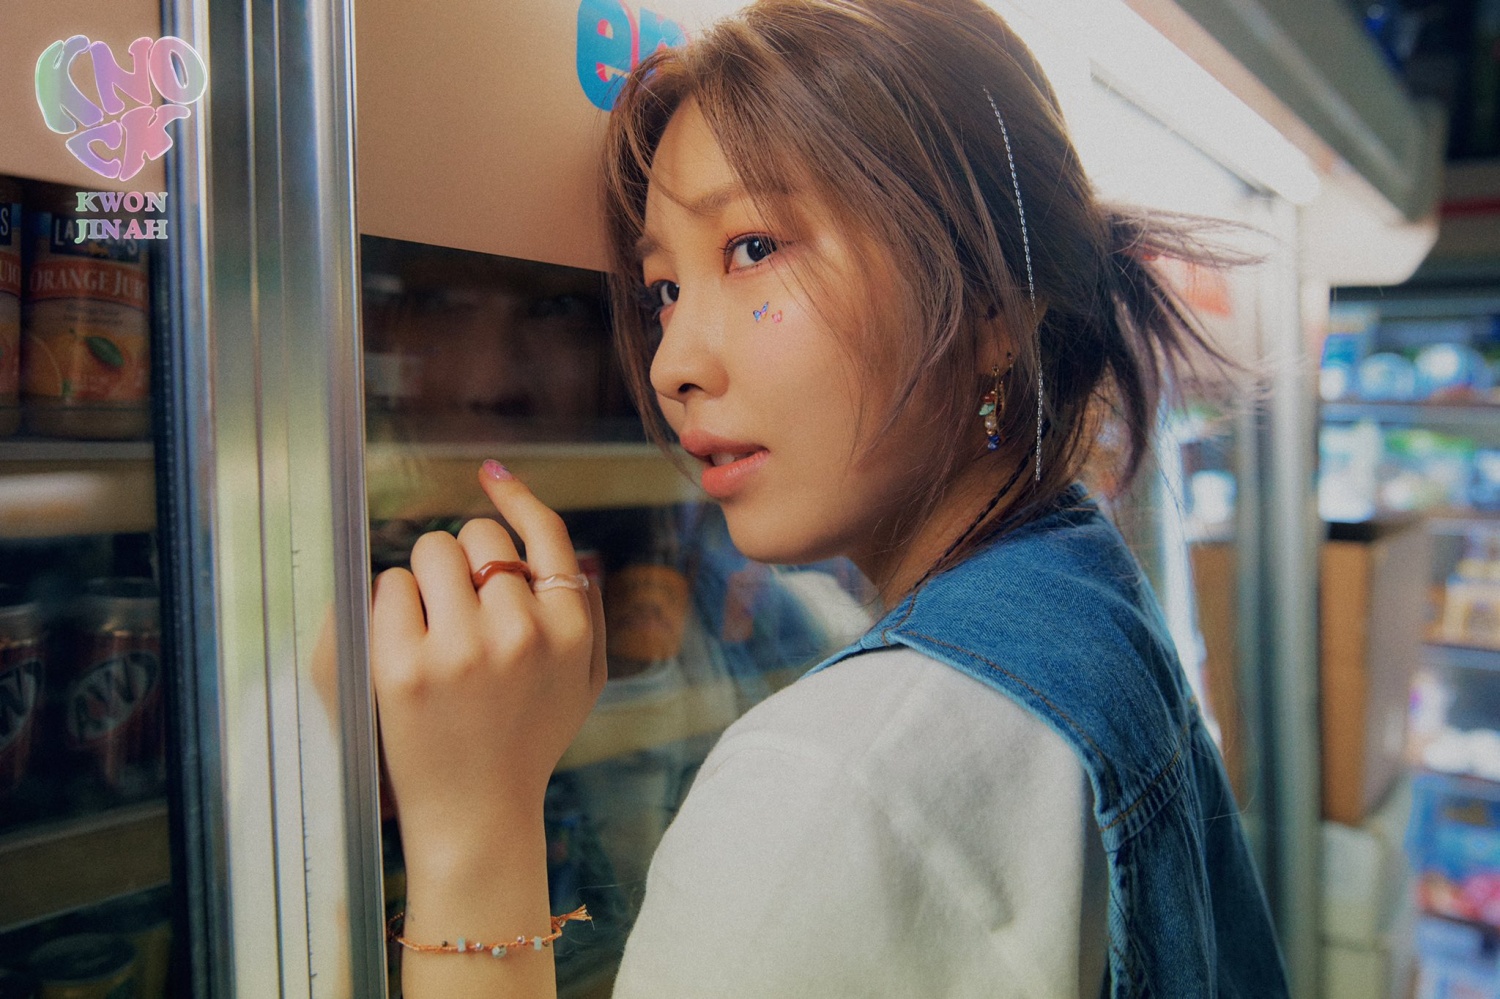 Kwon Jin-ah, summer single 'KNOCK' concept photo released... fresh summer mood